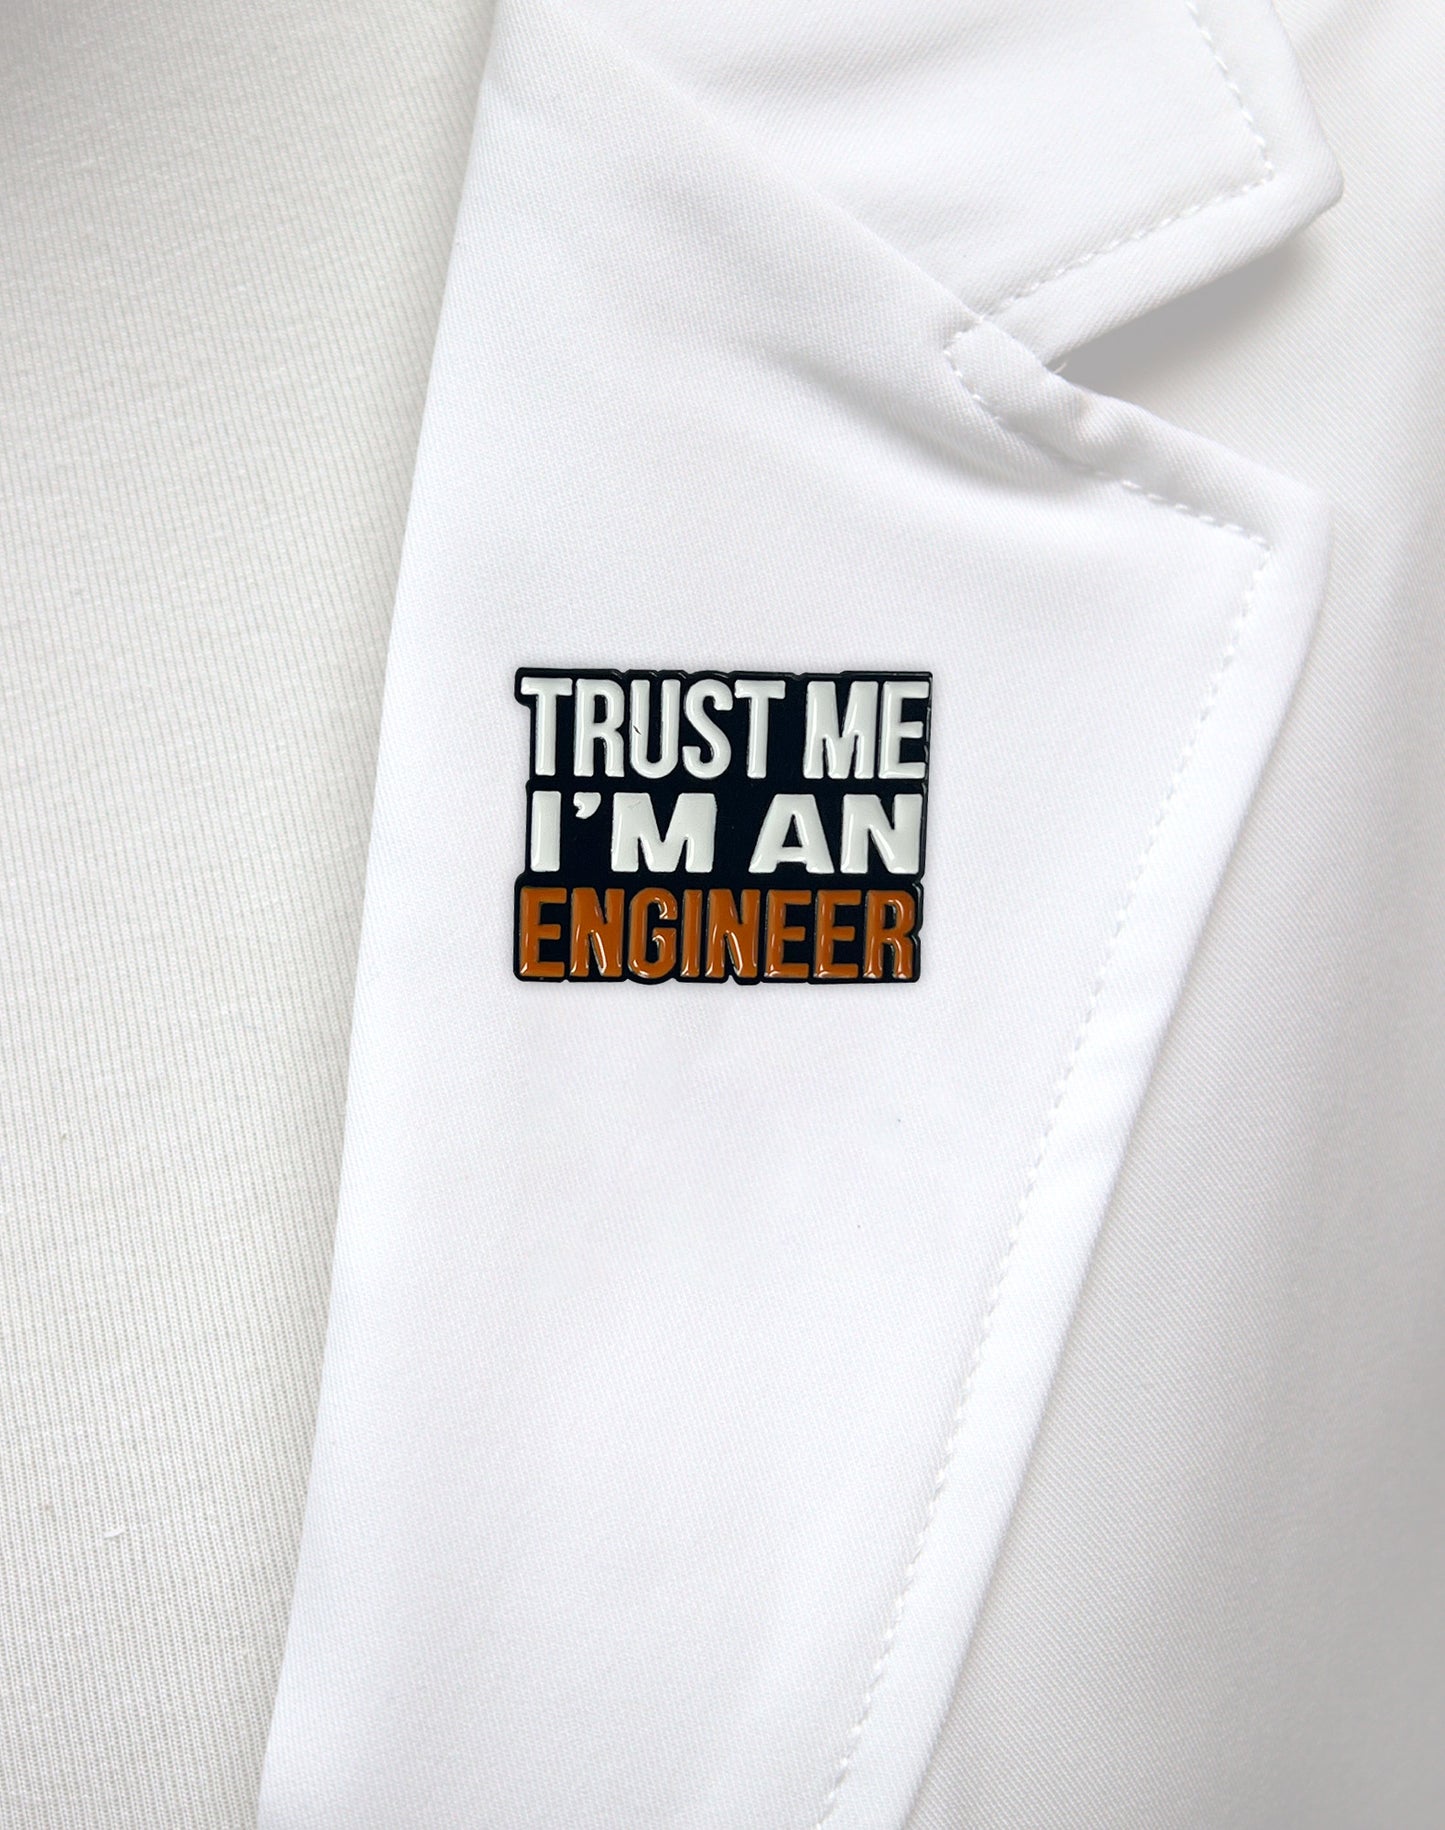 دبوس (ثق بي، أنا مهندس!)